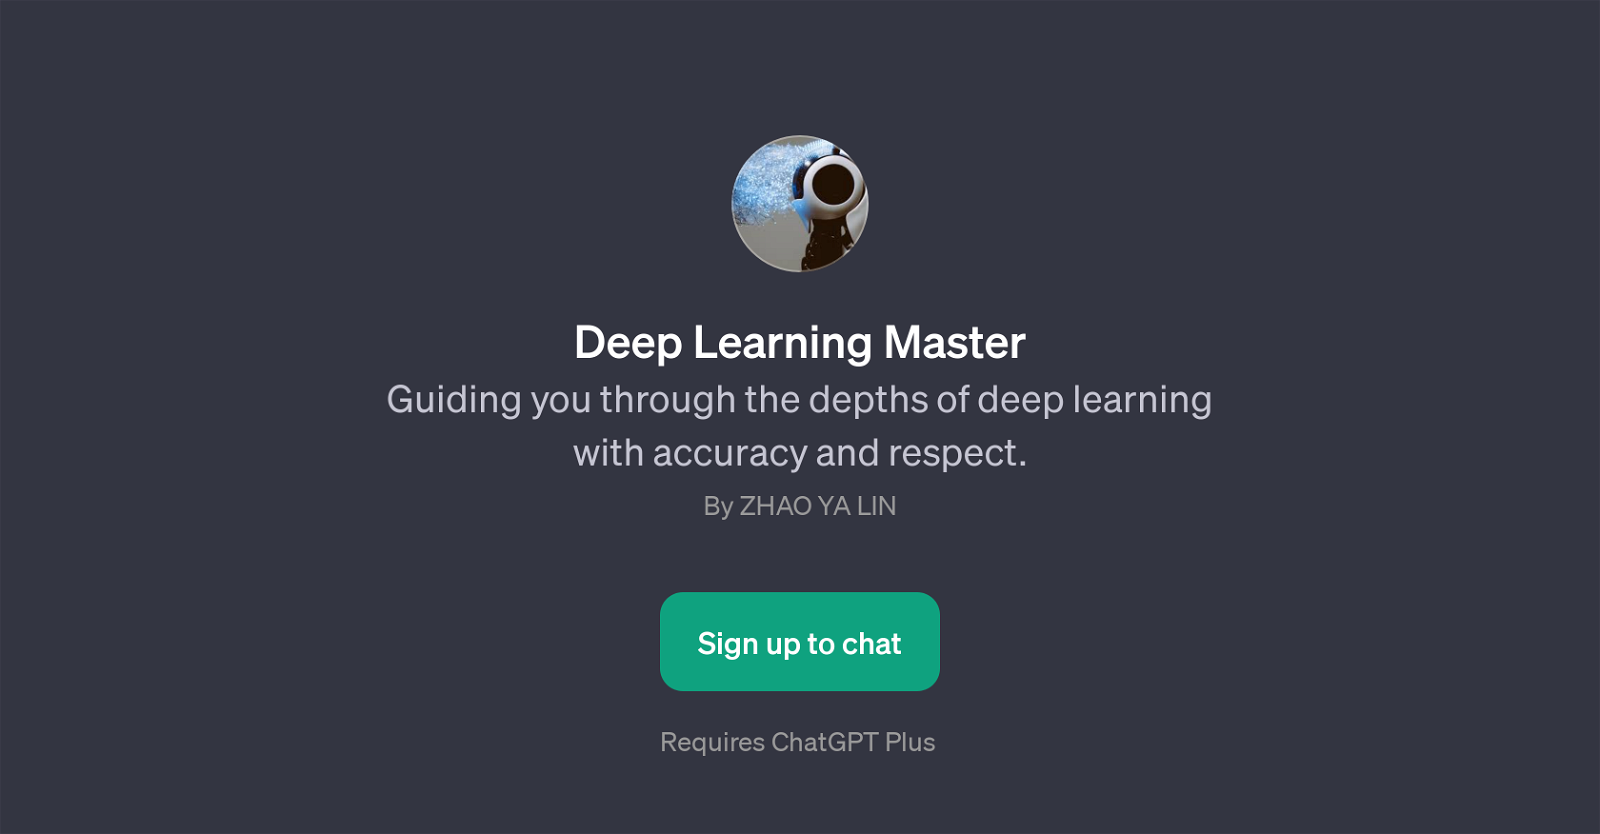 Deep Learning Master website